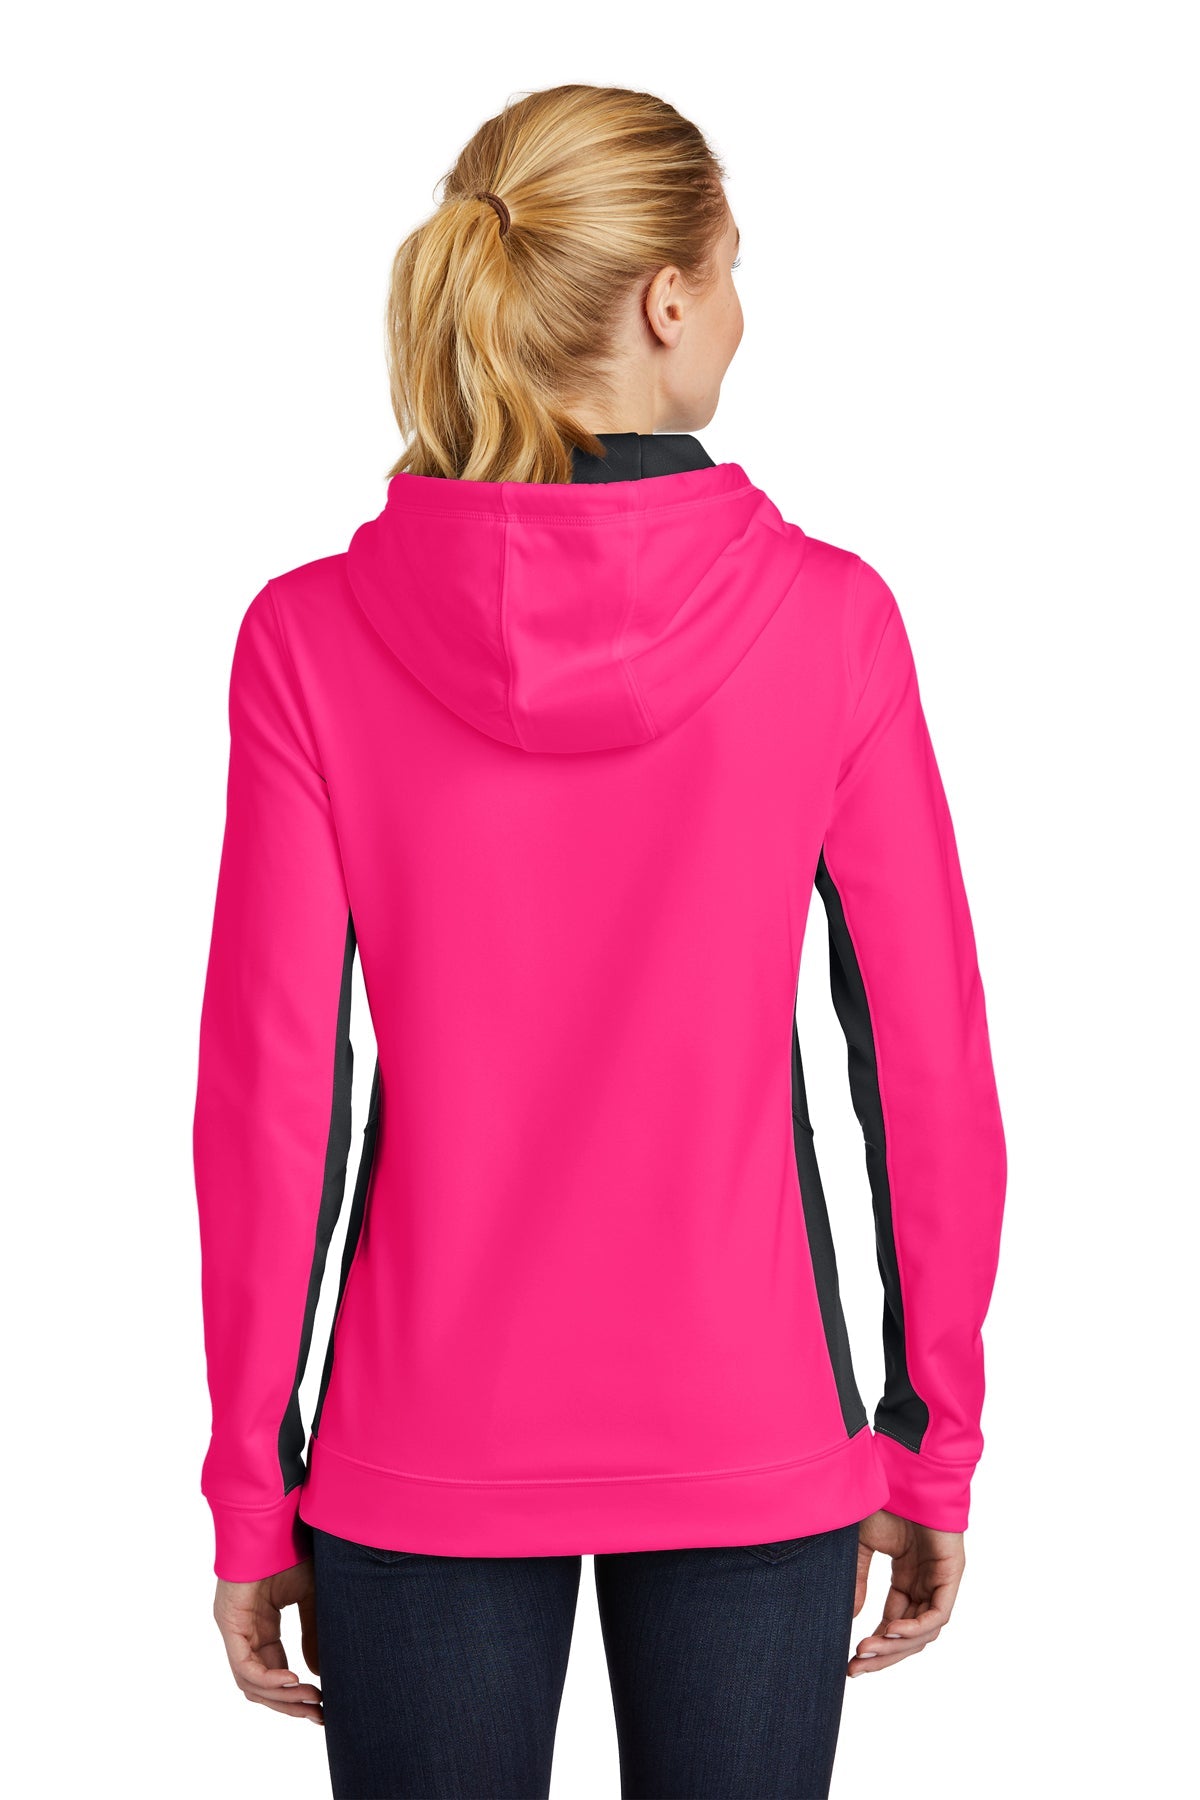 sport-tek_lst235 _neon pink/ black_company_logo_sweatshirts